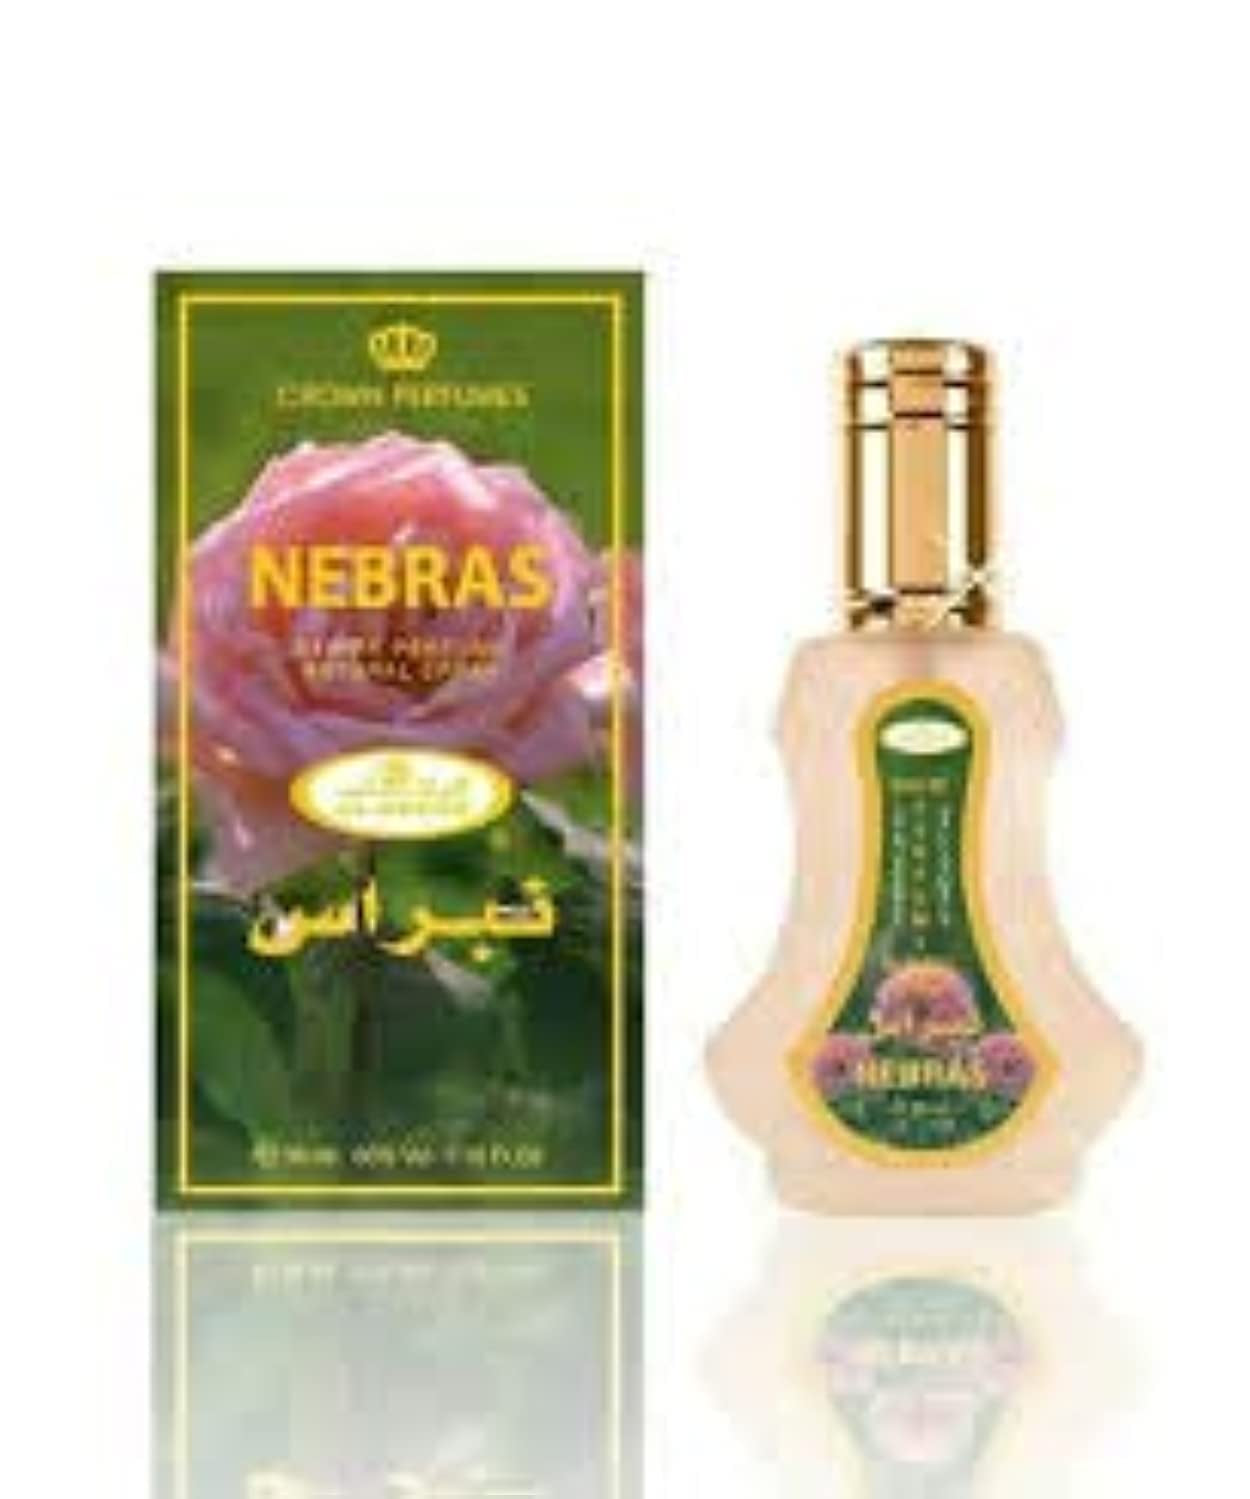 Nebras (35ml) spray perfume by Al Rehab